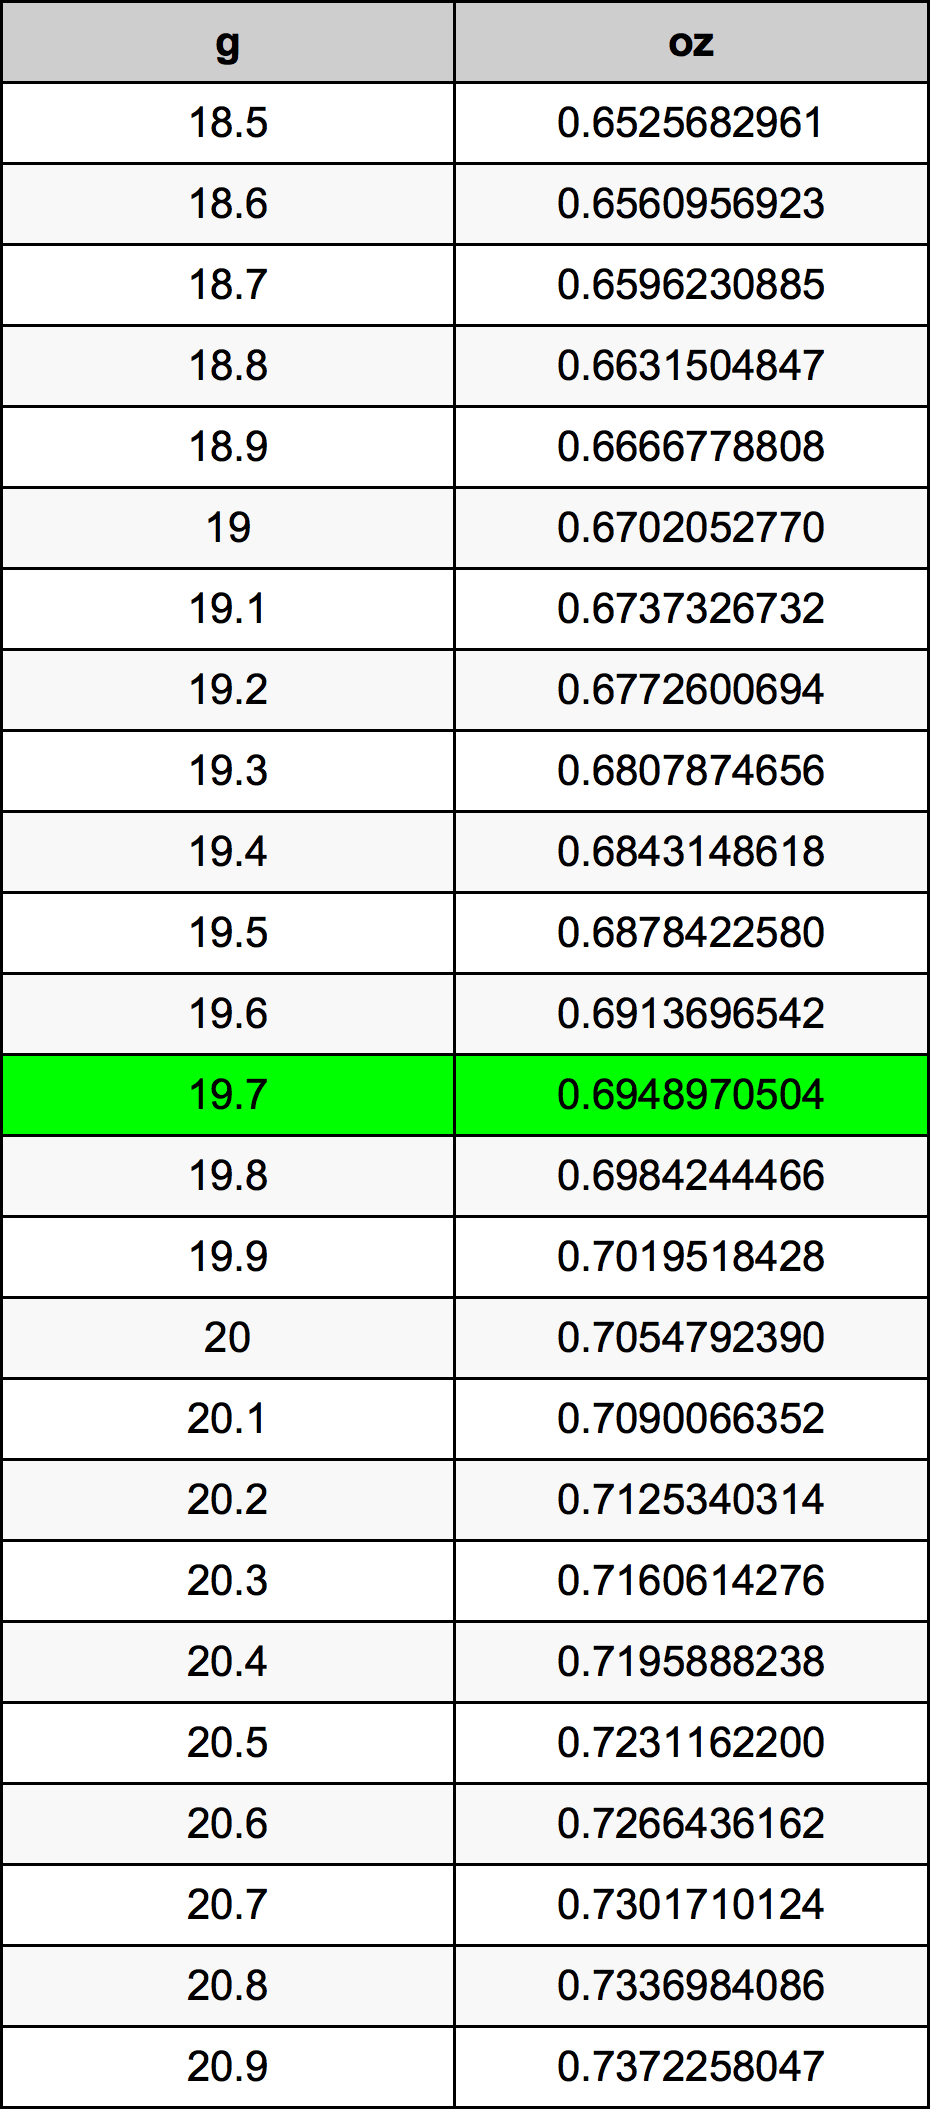 19.7 غرام جدول تحويل